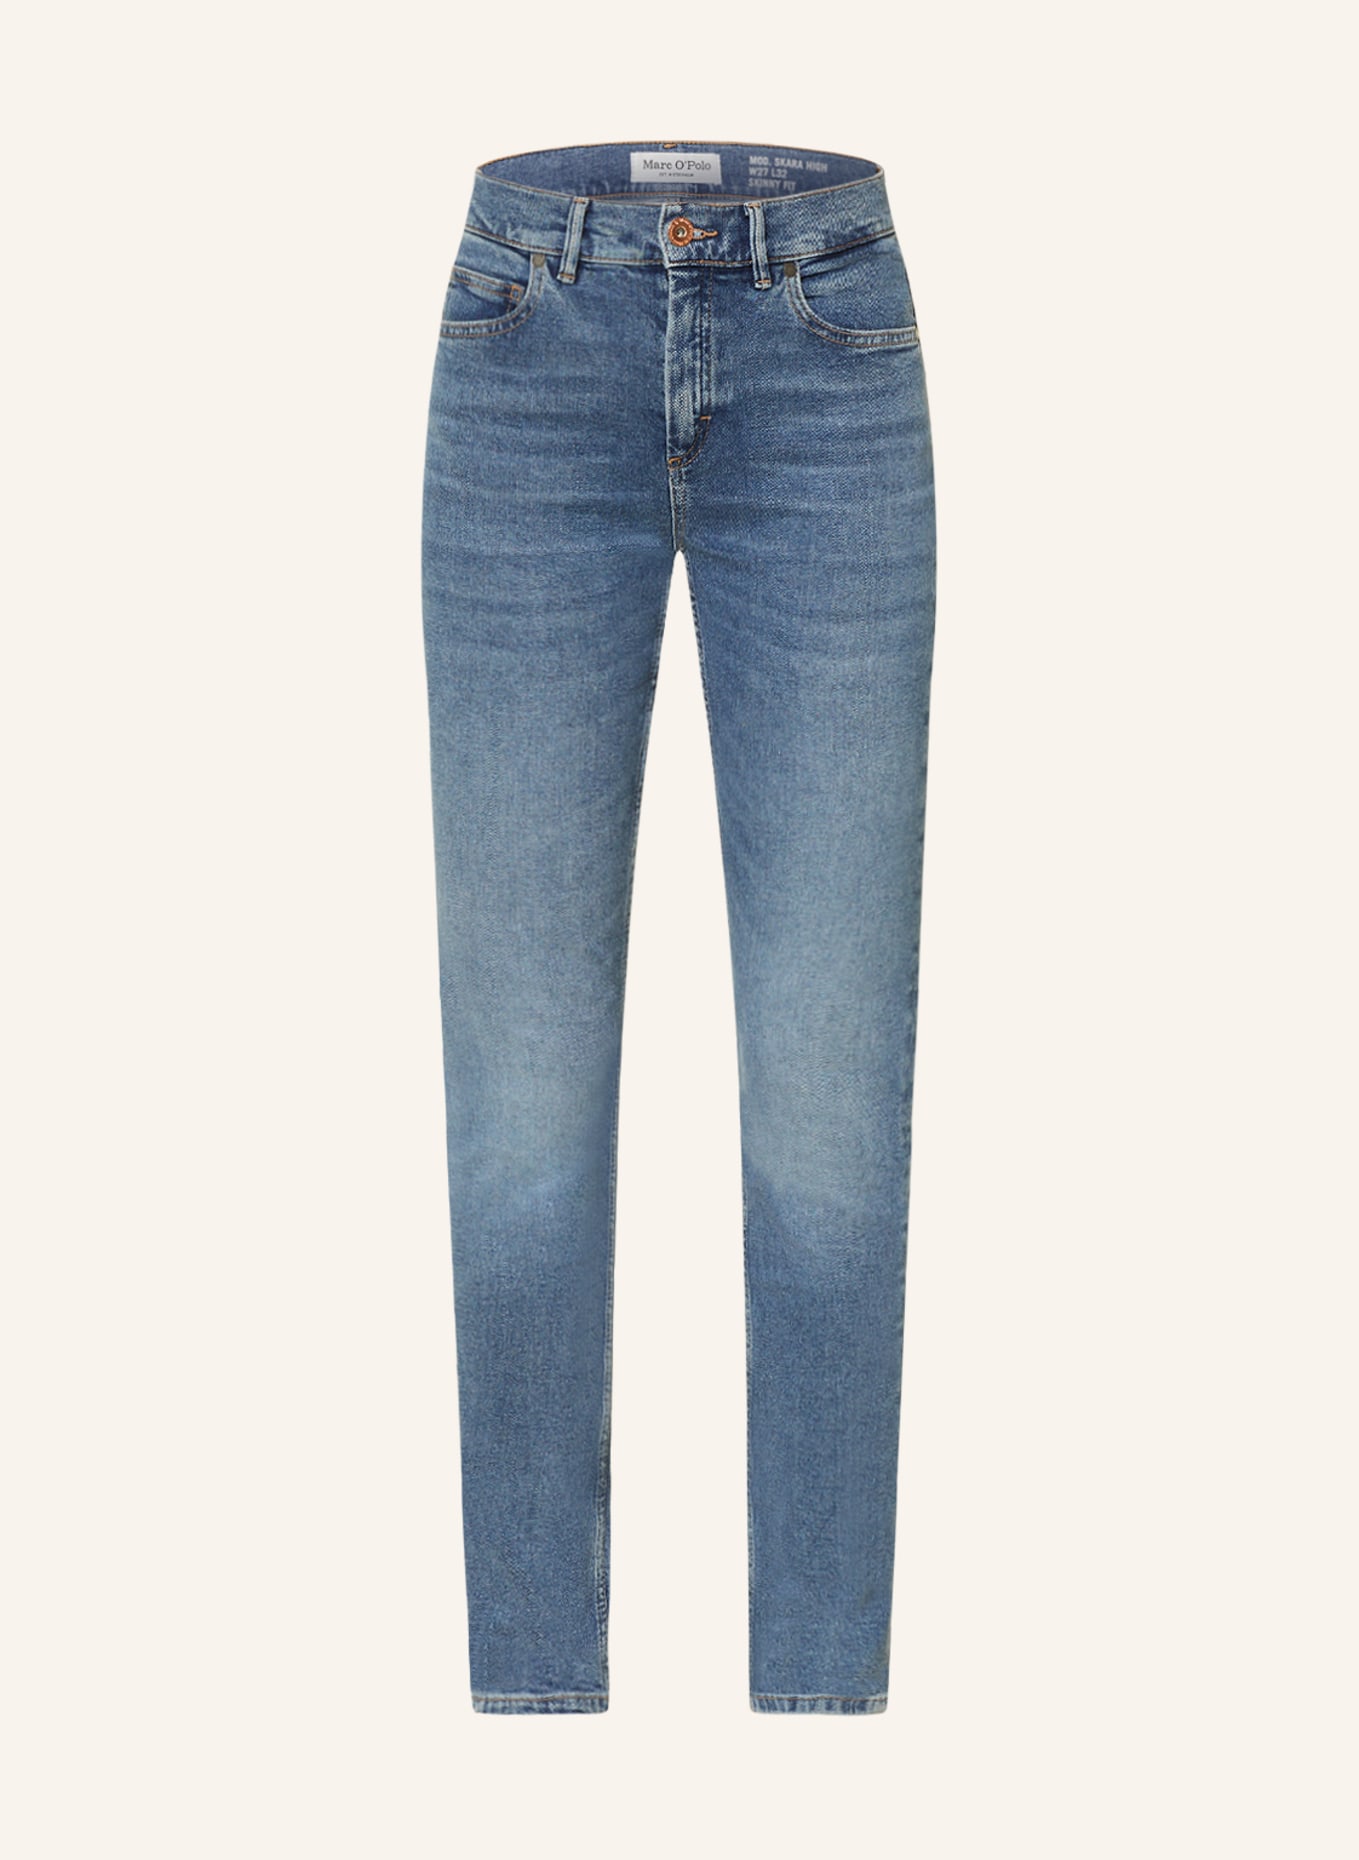 Marc O'Polo Skinny Jeans SKARA HIGH, Farbe: 015 Authentic mid sea blue wash (Bild 1)